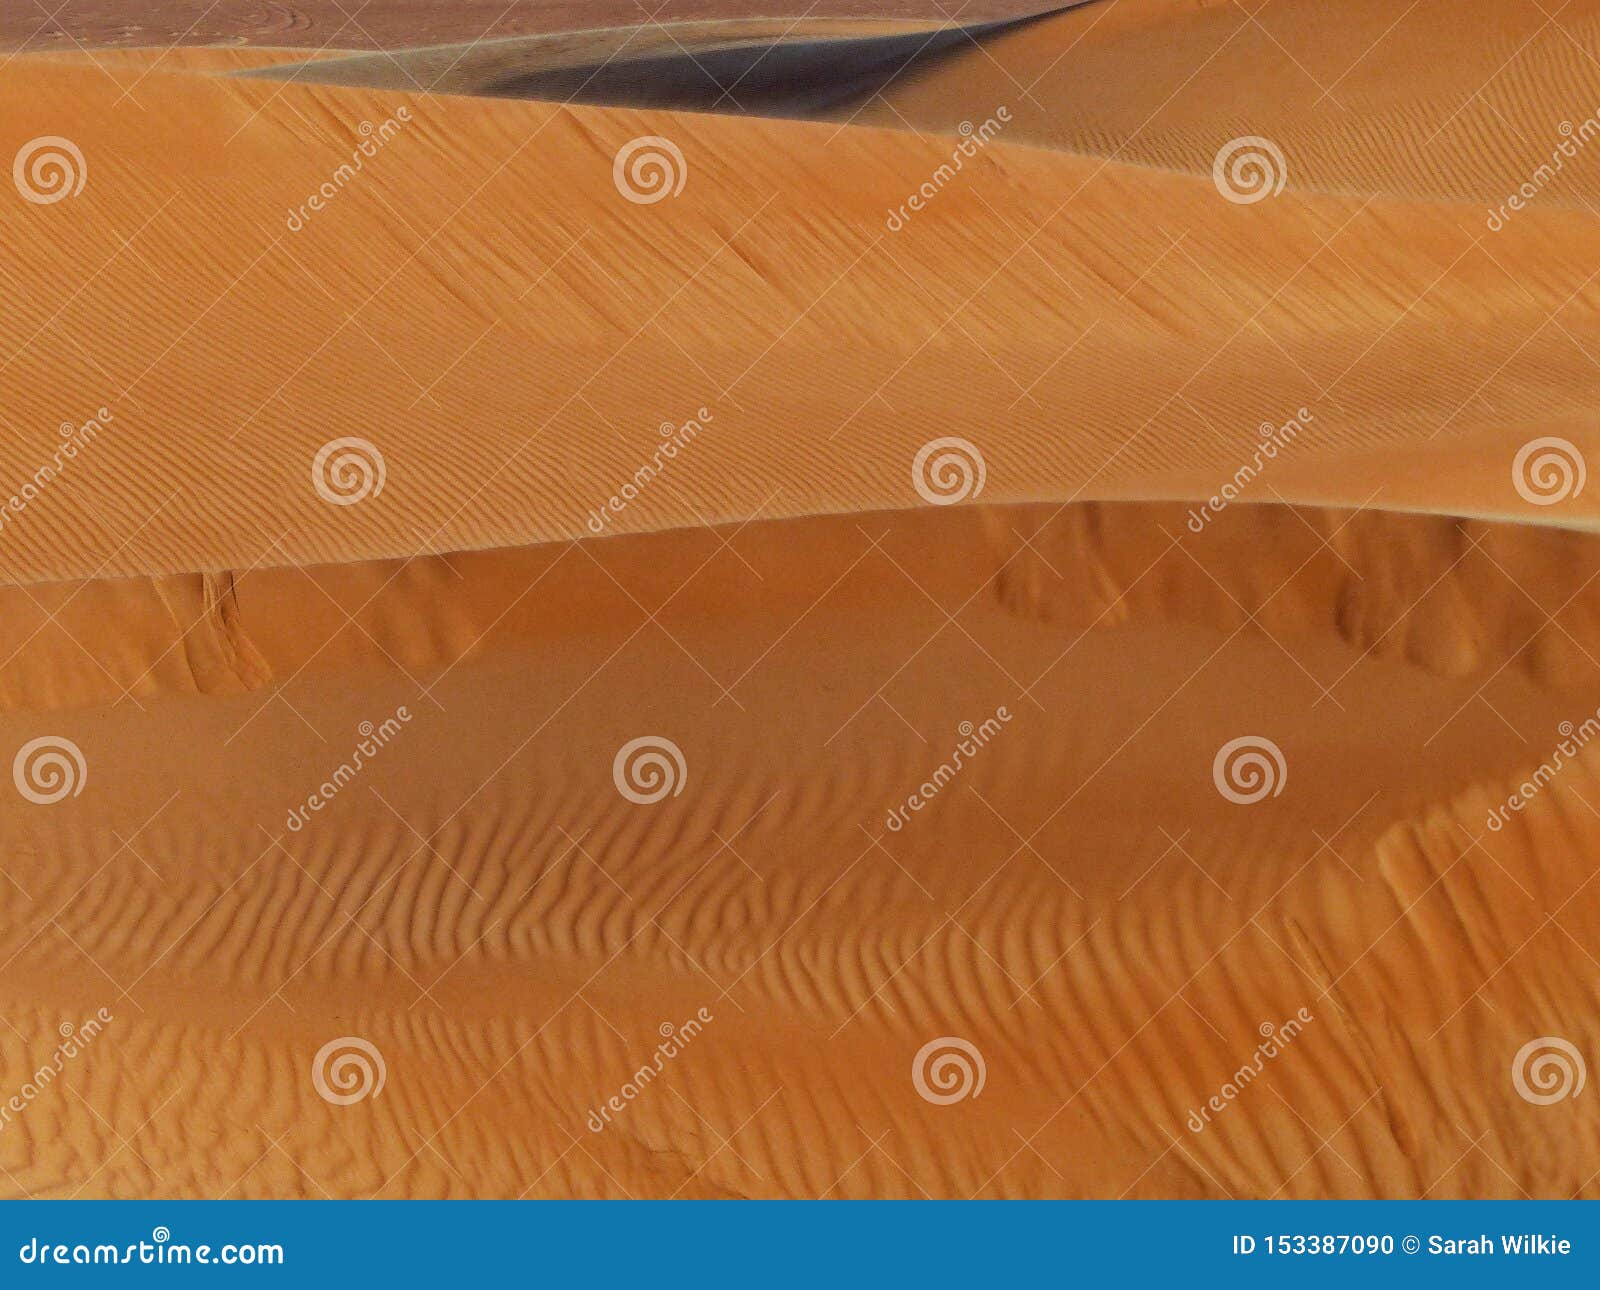 sand dunes, wahiba sands, oman